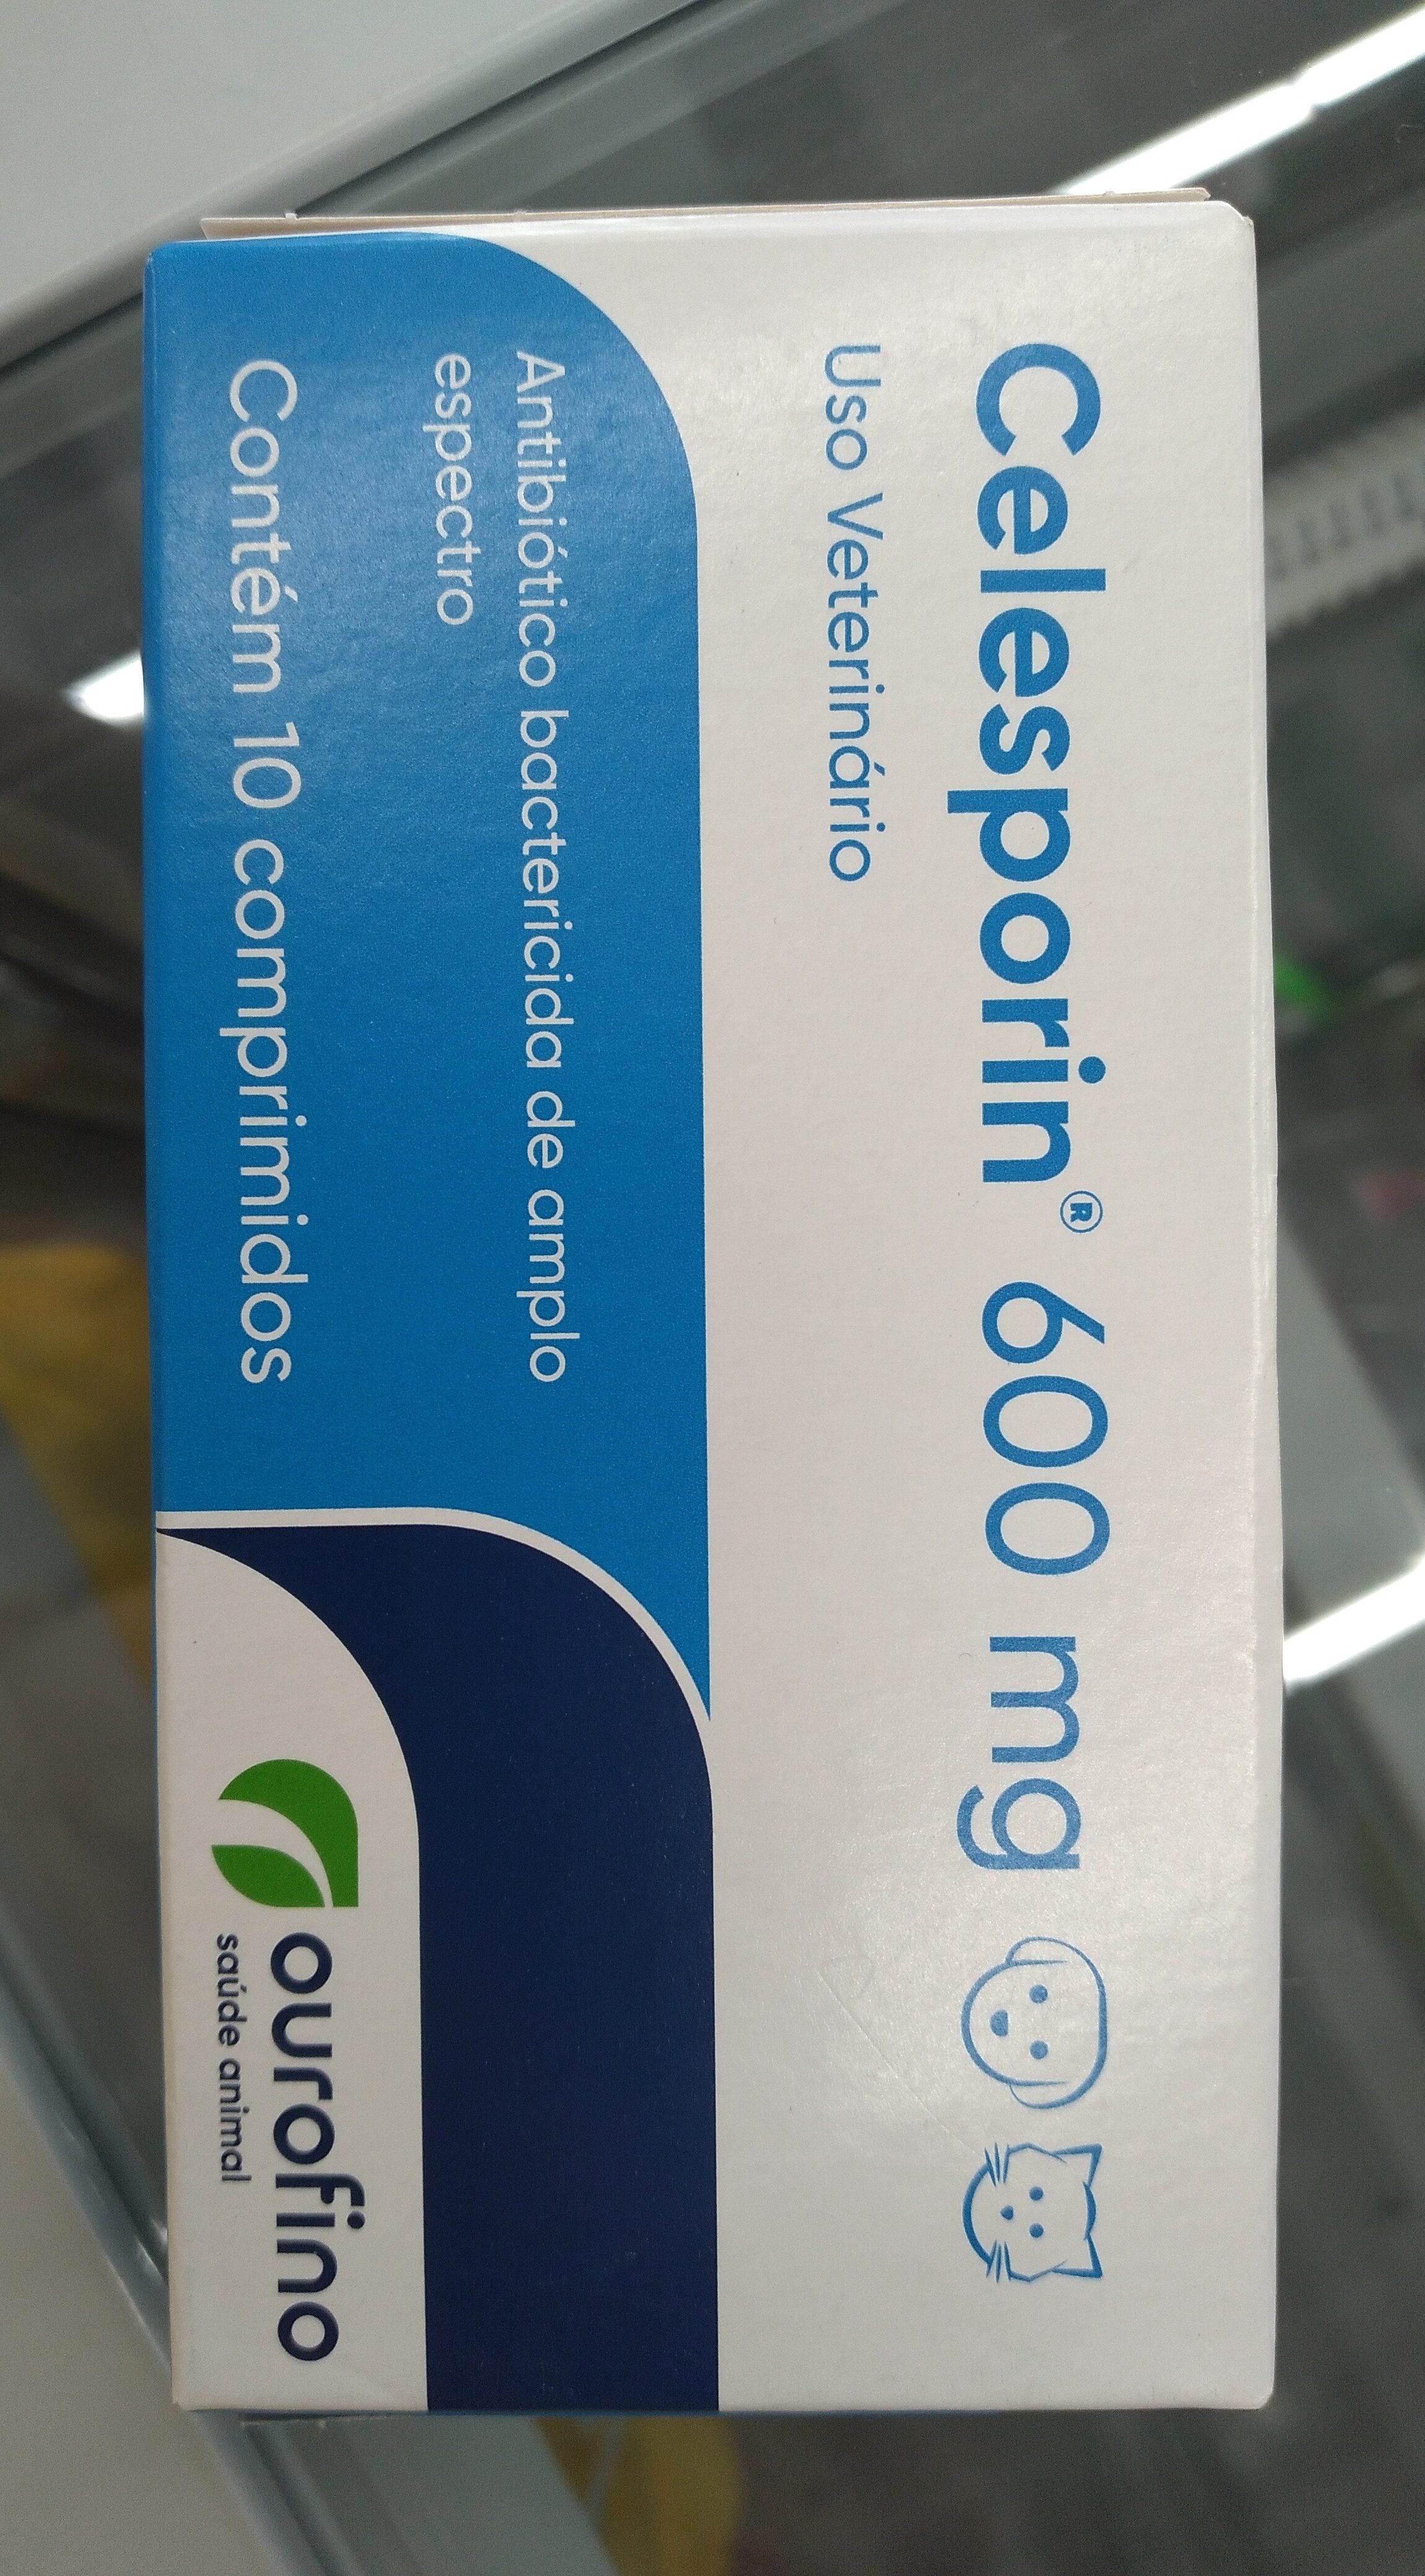 Med. Celespirin 600mg - Product - pt